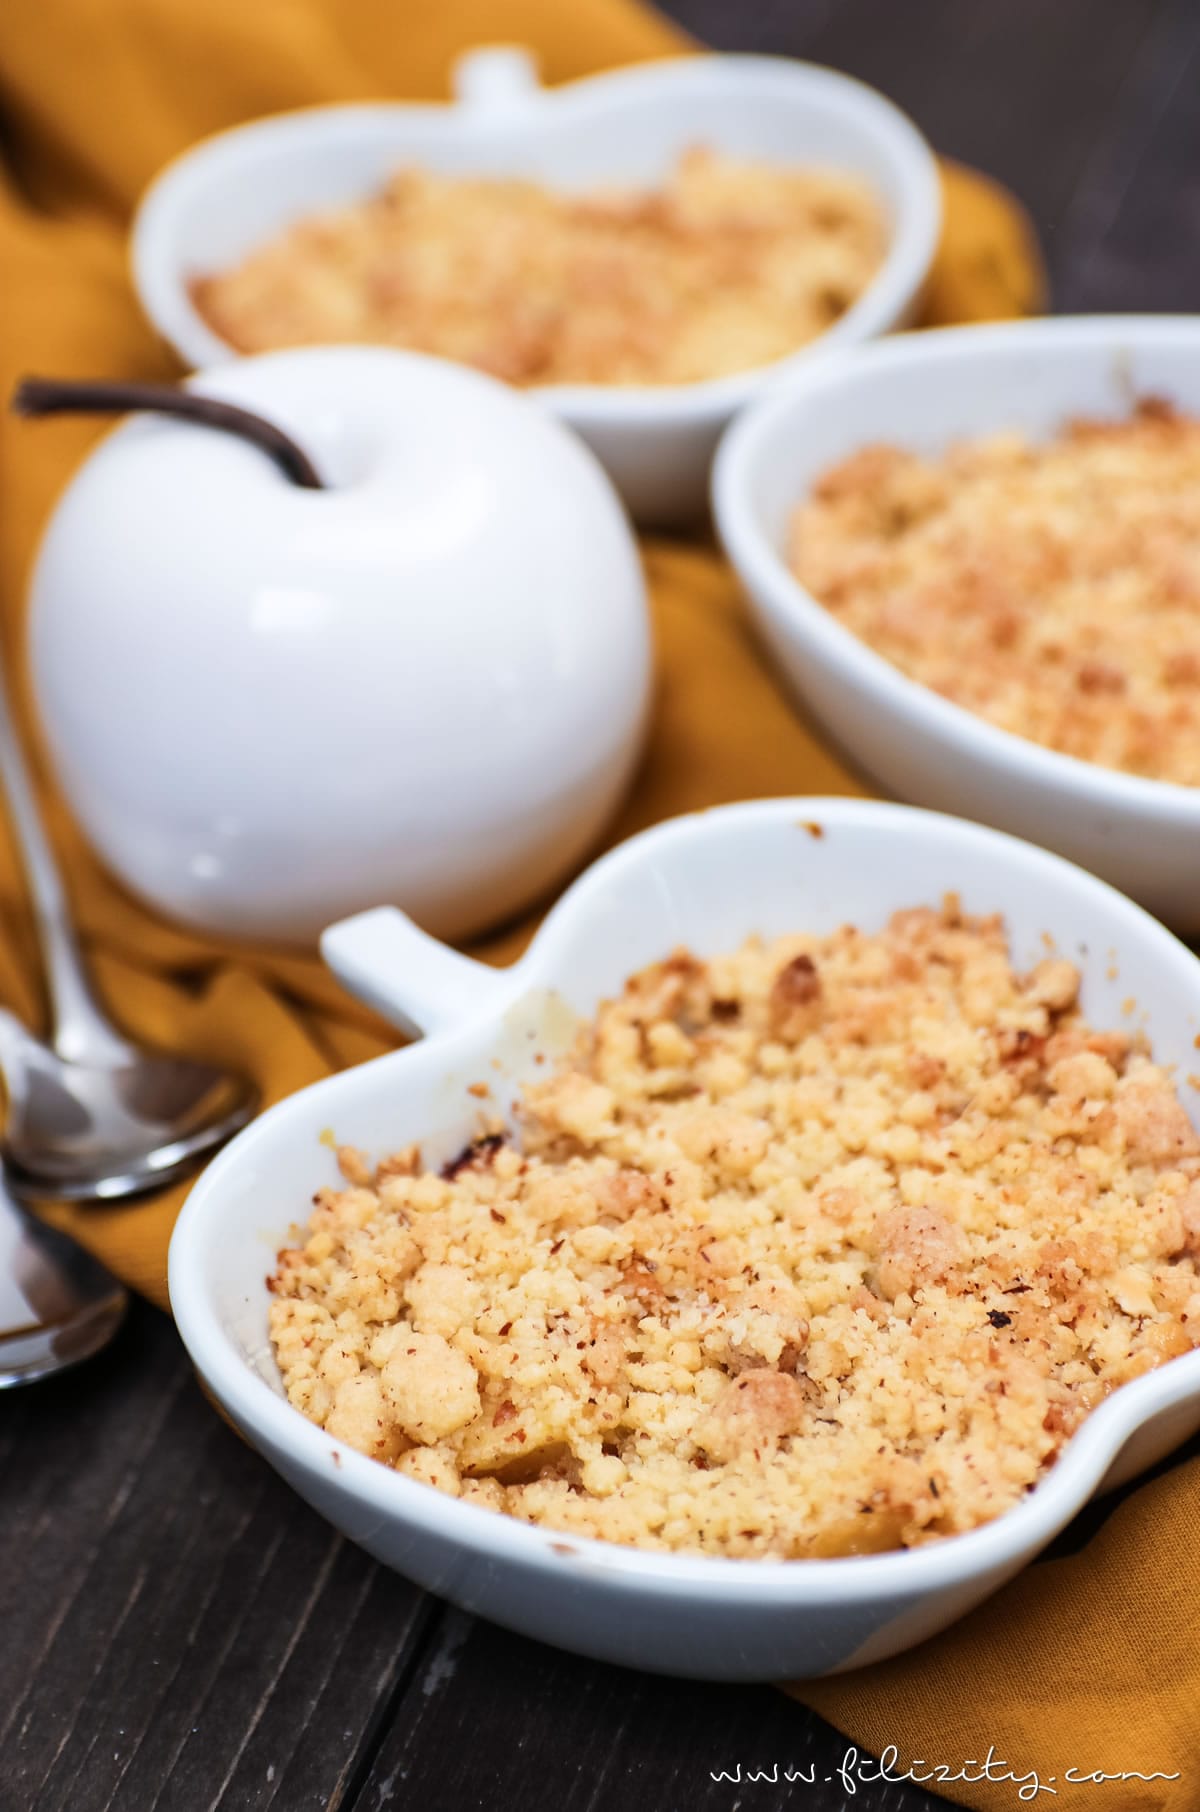 Rezept: Apfel-Quitten-Crumble - Das perfekte Herbst-Dessert | Filizity.com | Food-Blog aus dem Rheinland #crumble #herbst #apfel #quitten